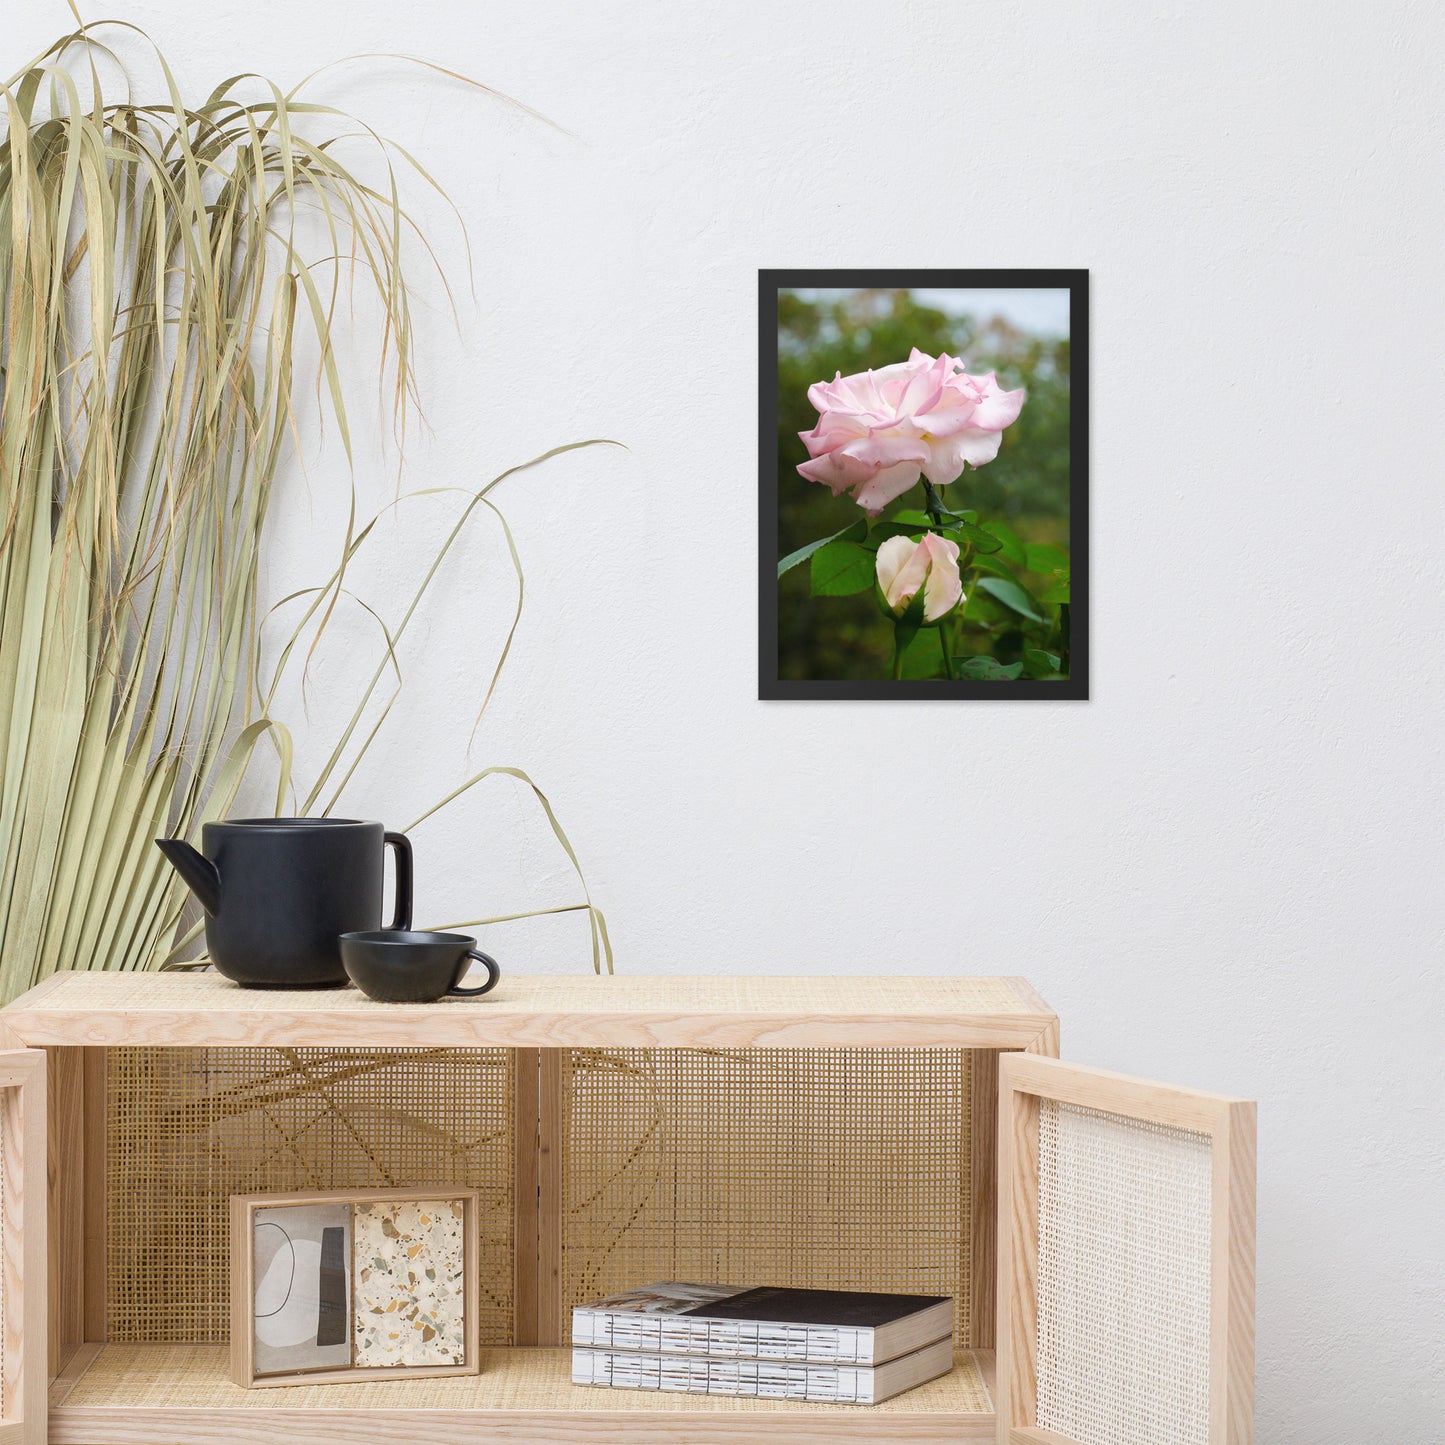 Floral Wall Art Framed: Admiration - Pink Rose Floral / Botanical / Nature Photo Framed Wall Art Print - Artwork - Wall Decor - Home Decor